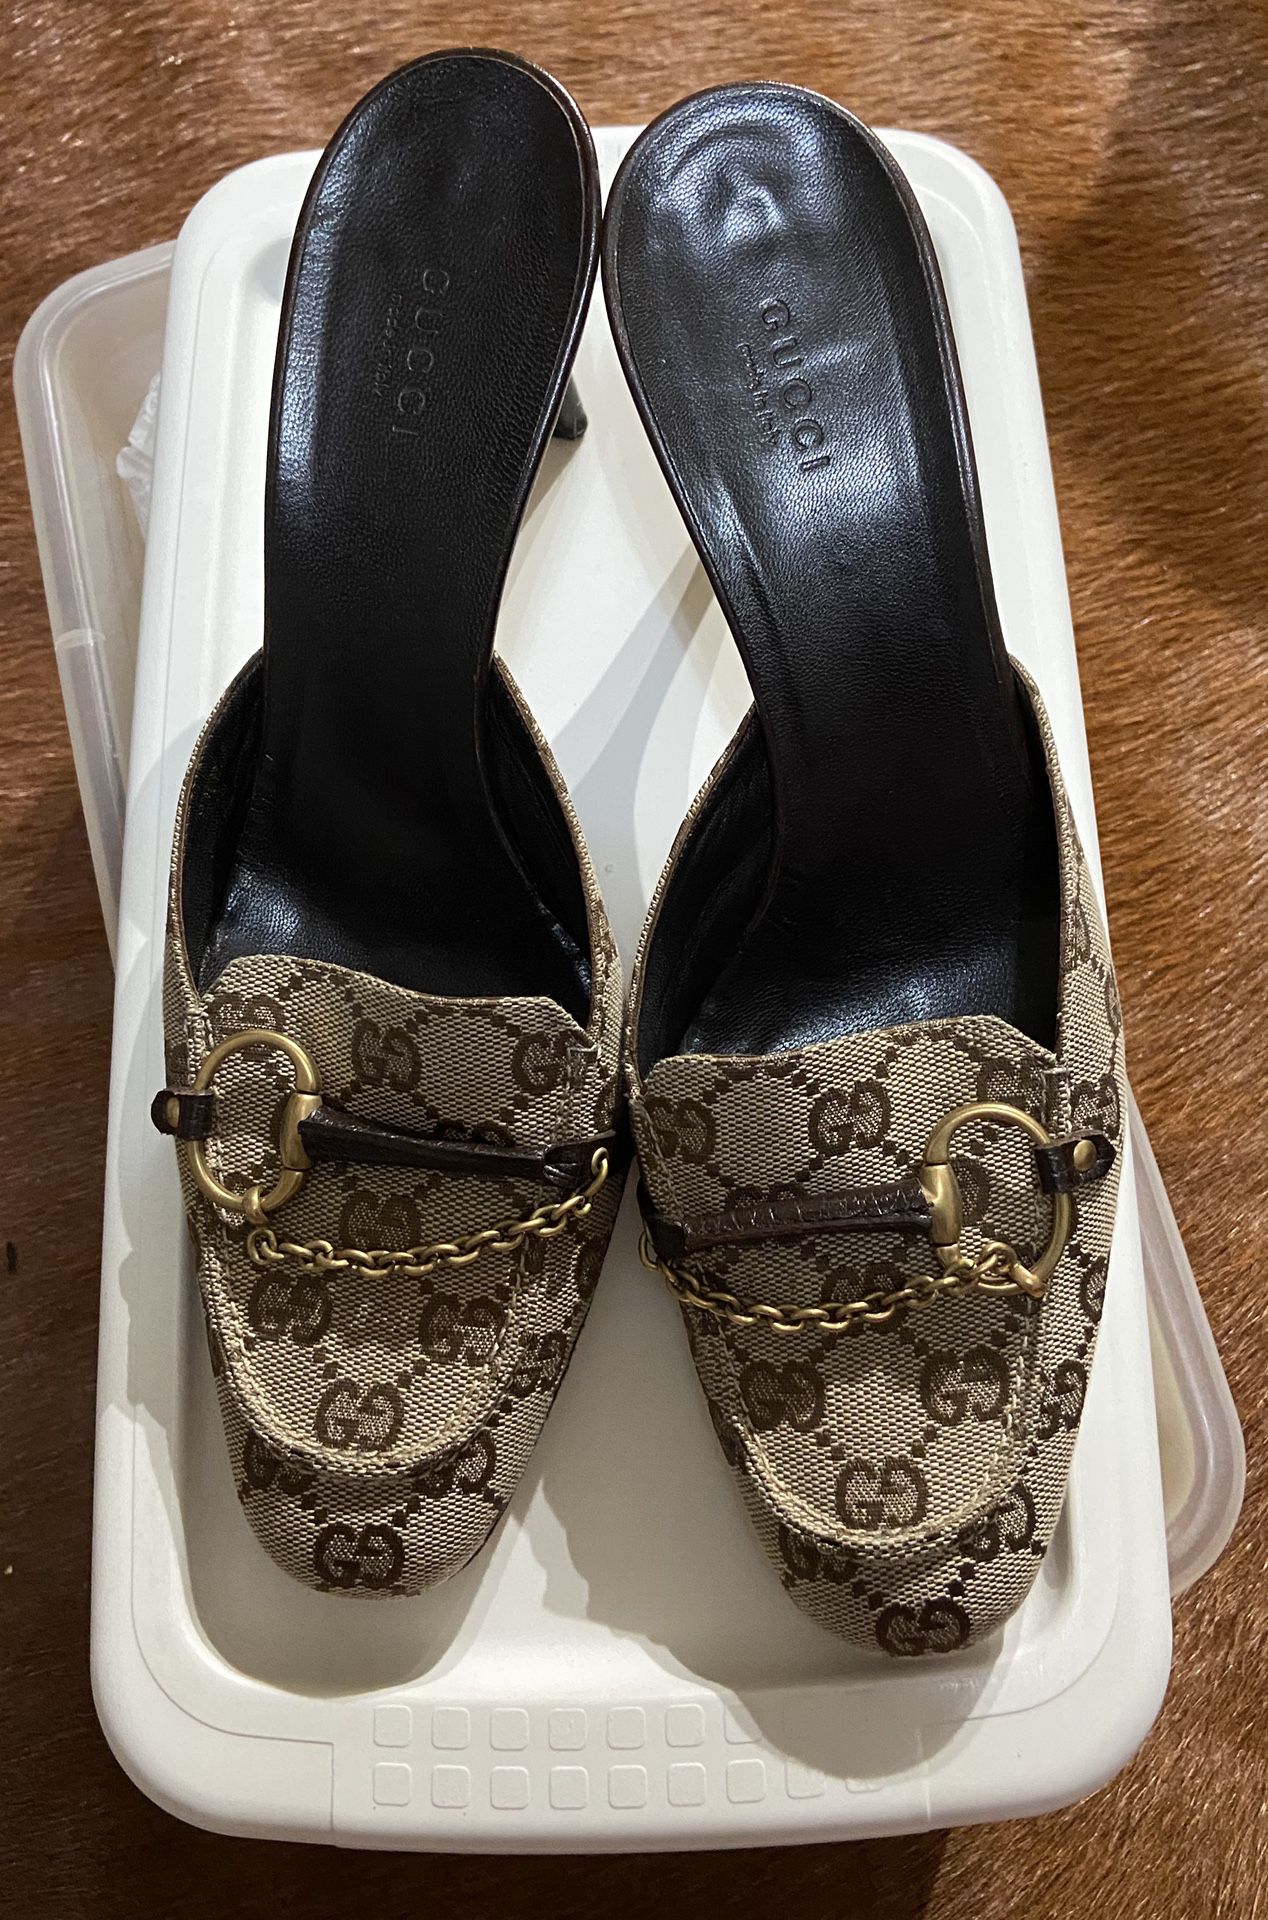 Women’s Classic GG Gucci Slingback Heels Size 9-1/2